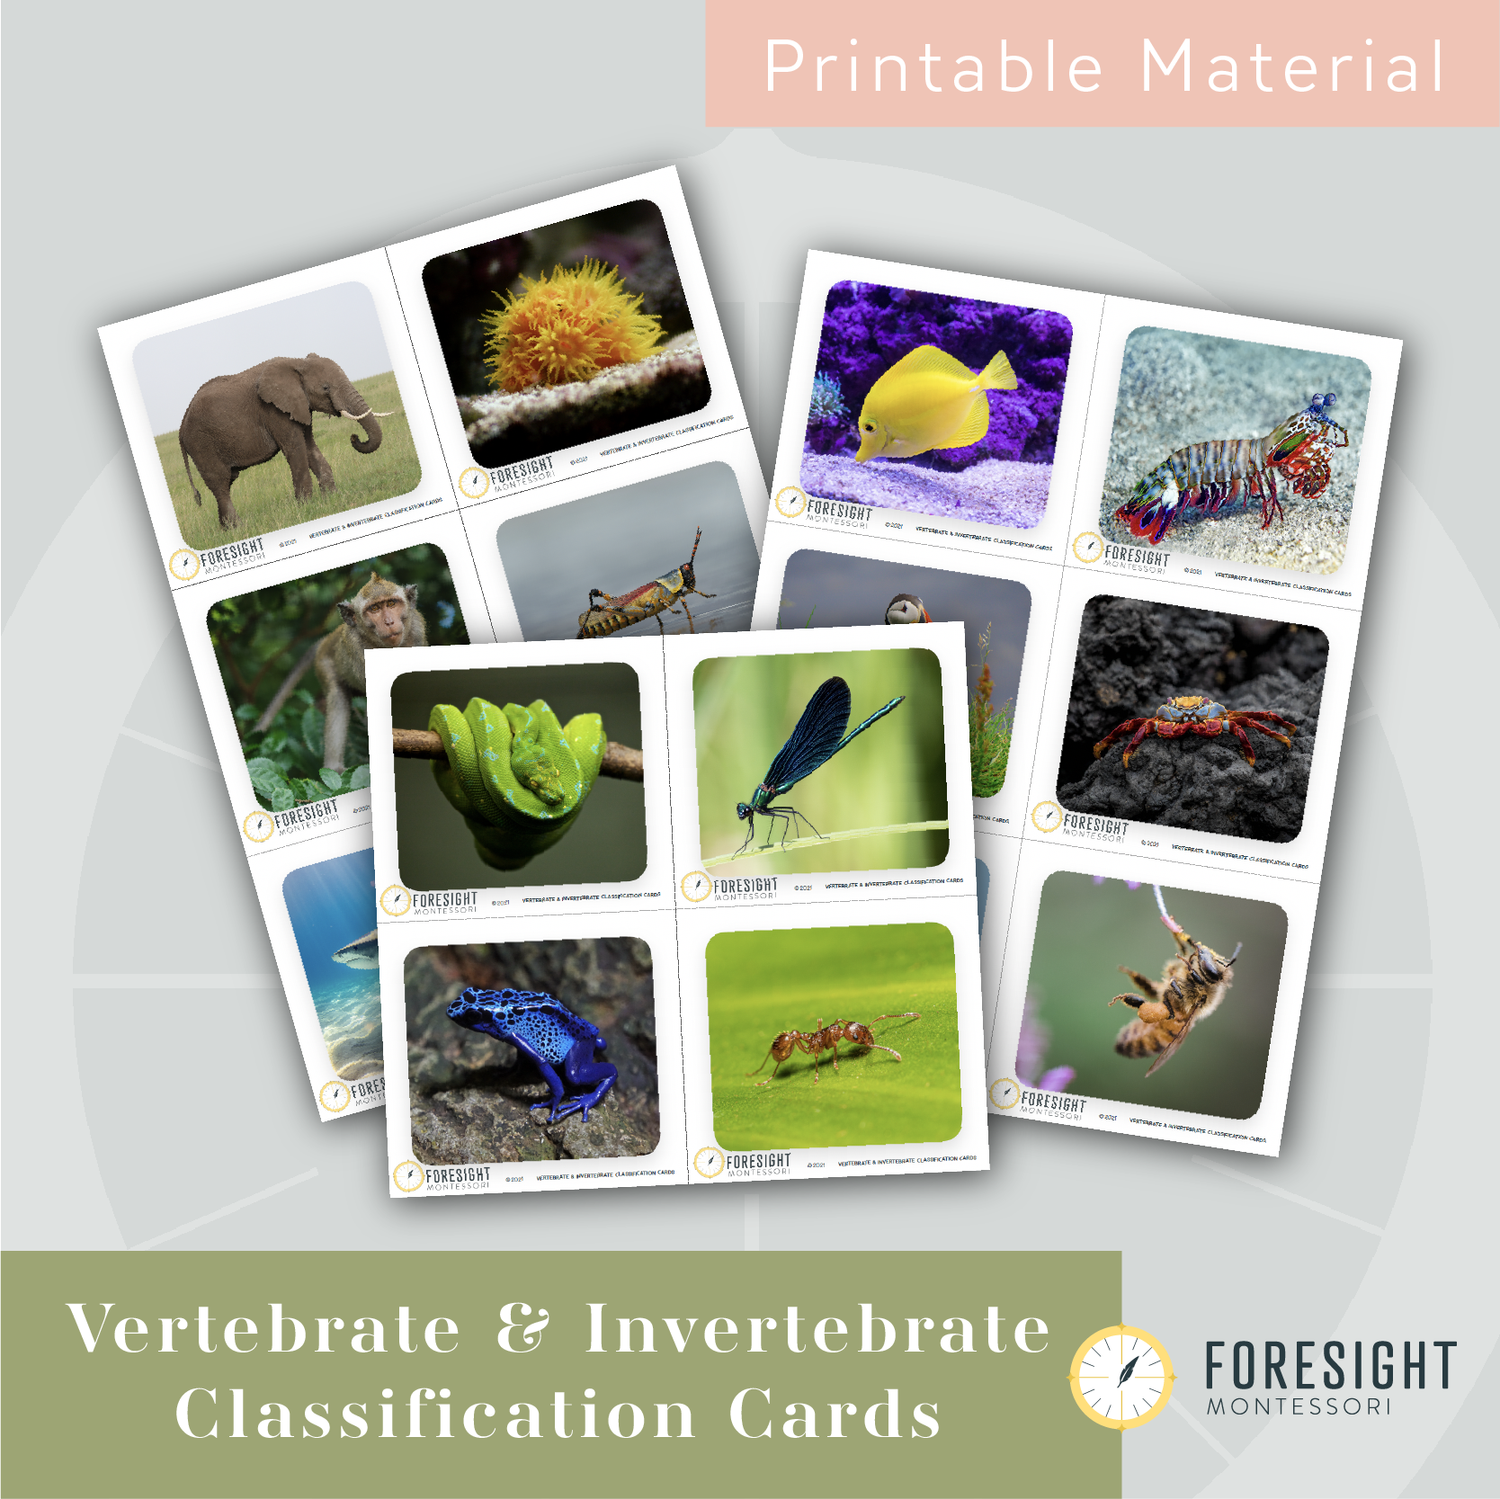 Vertebrate & Invertebrate Classification Cards — Foresight Montessori